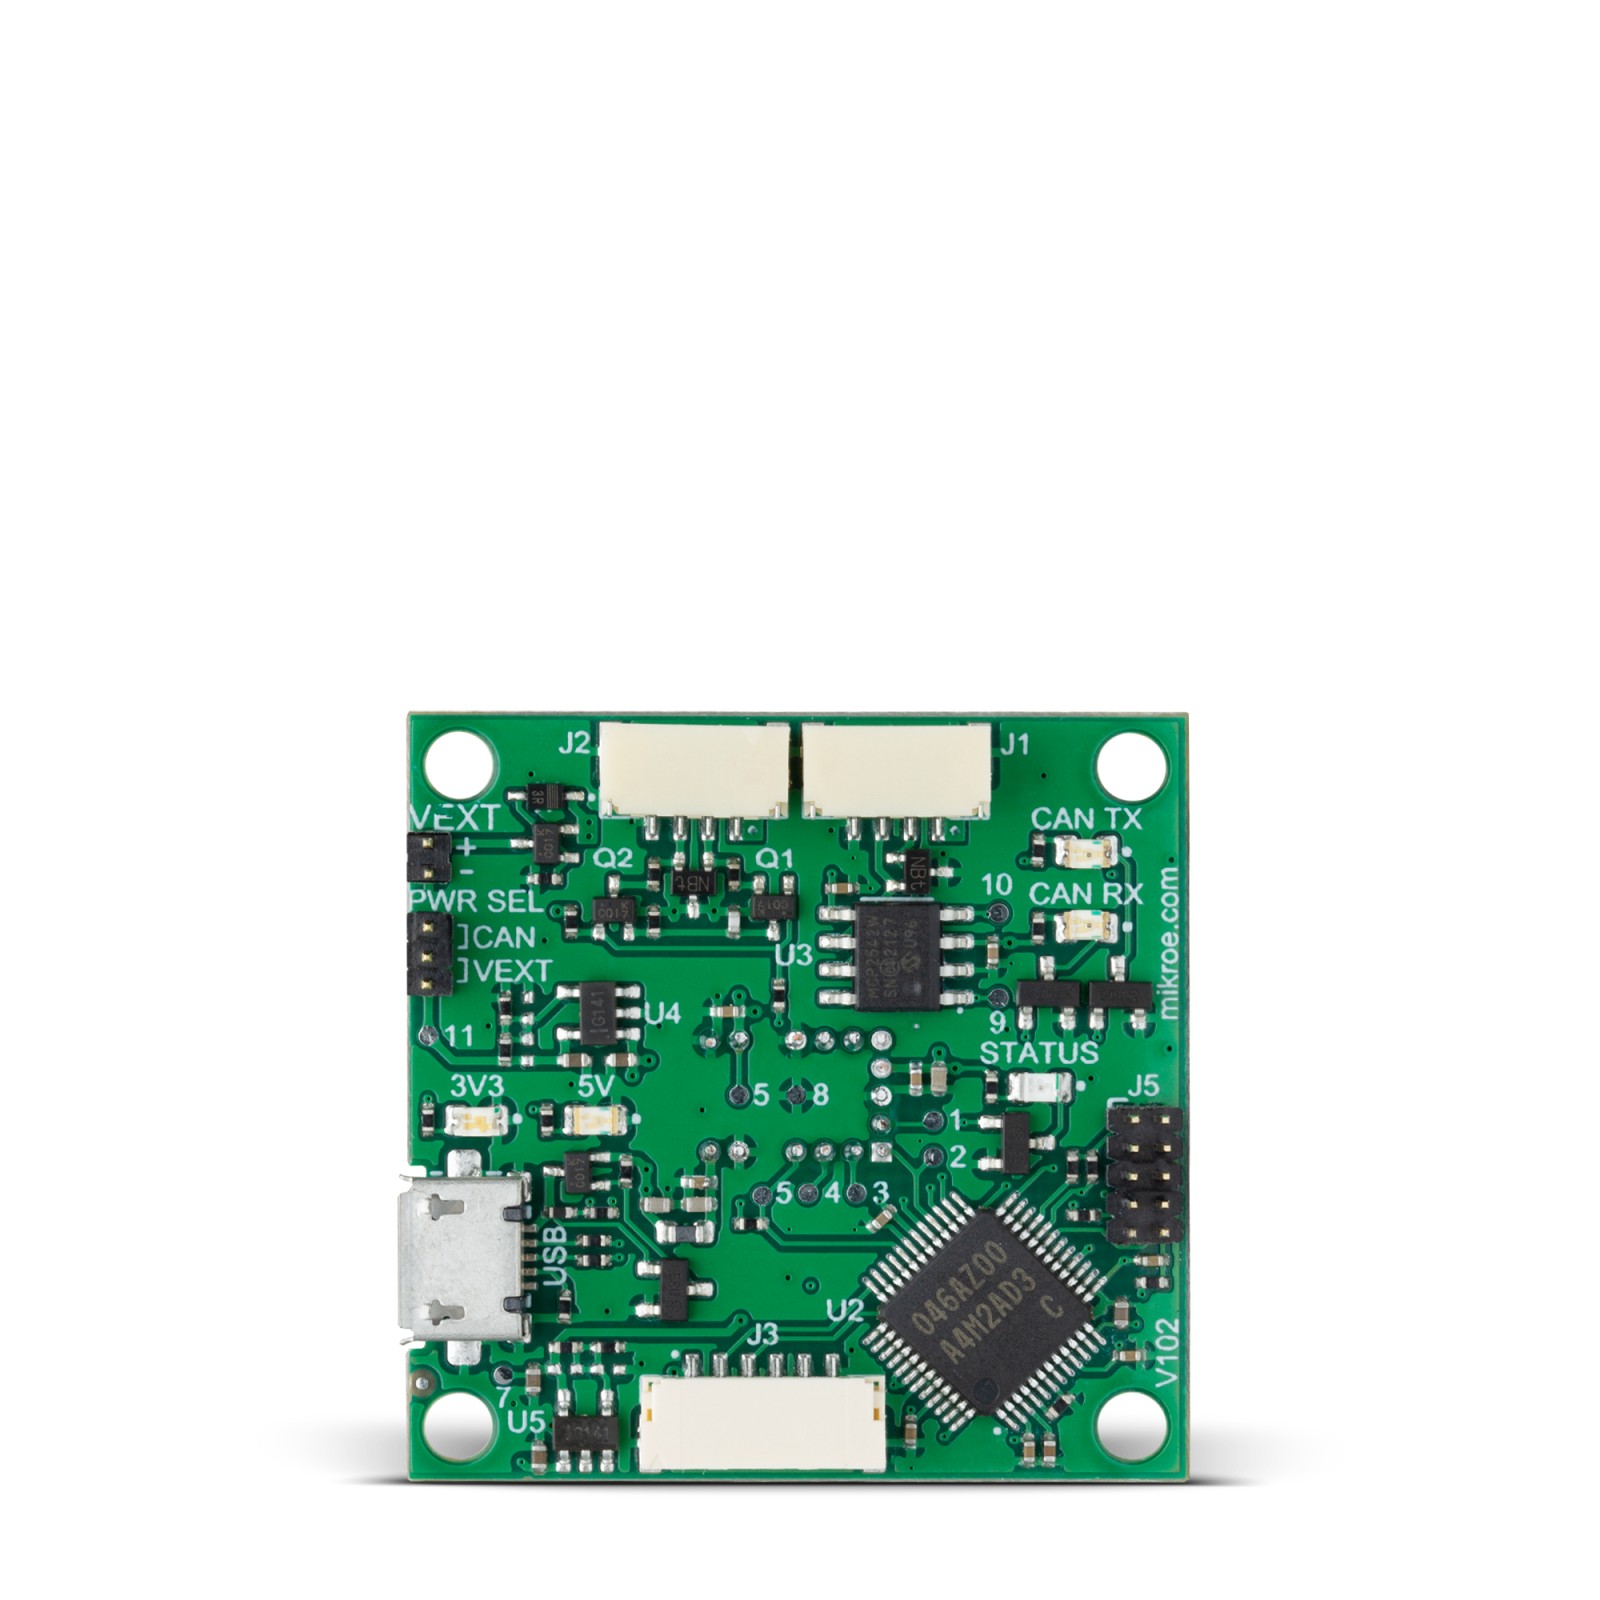 MIKROE BDC-AFBR-S50 ToF Sensor Board